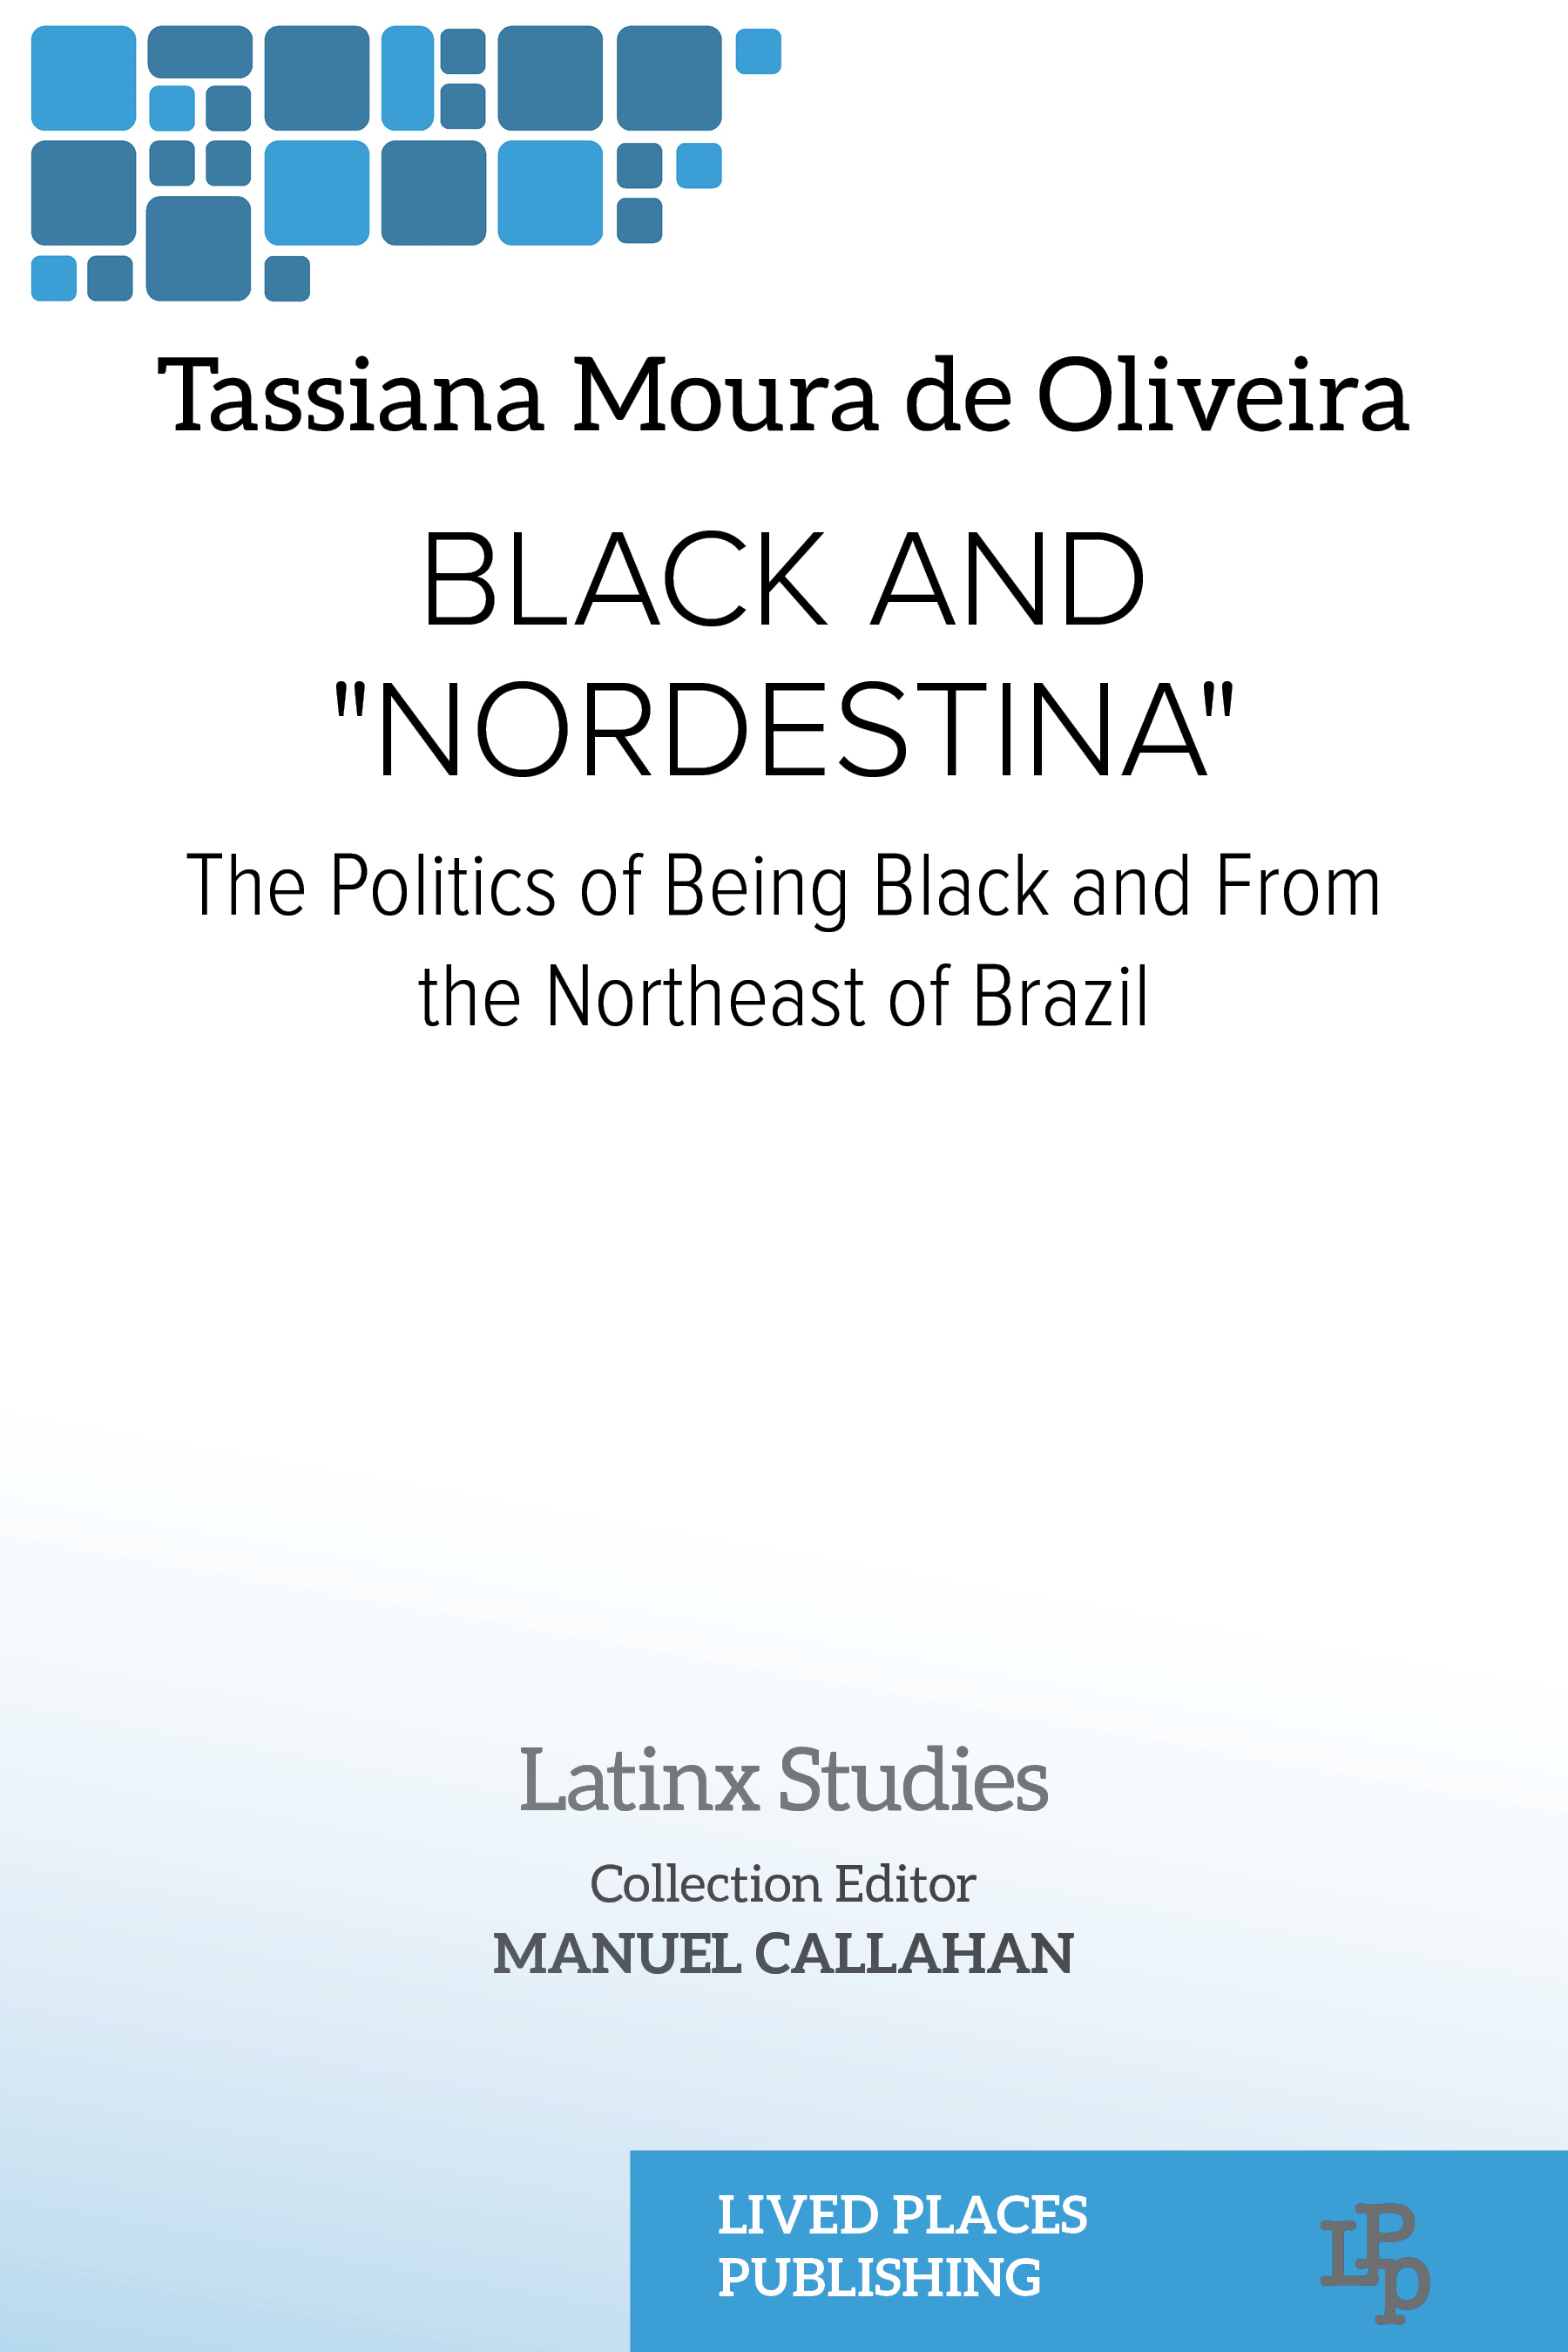 Black and "Nordestina"